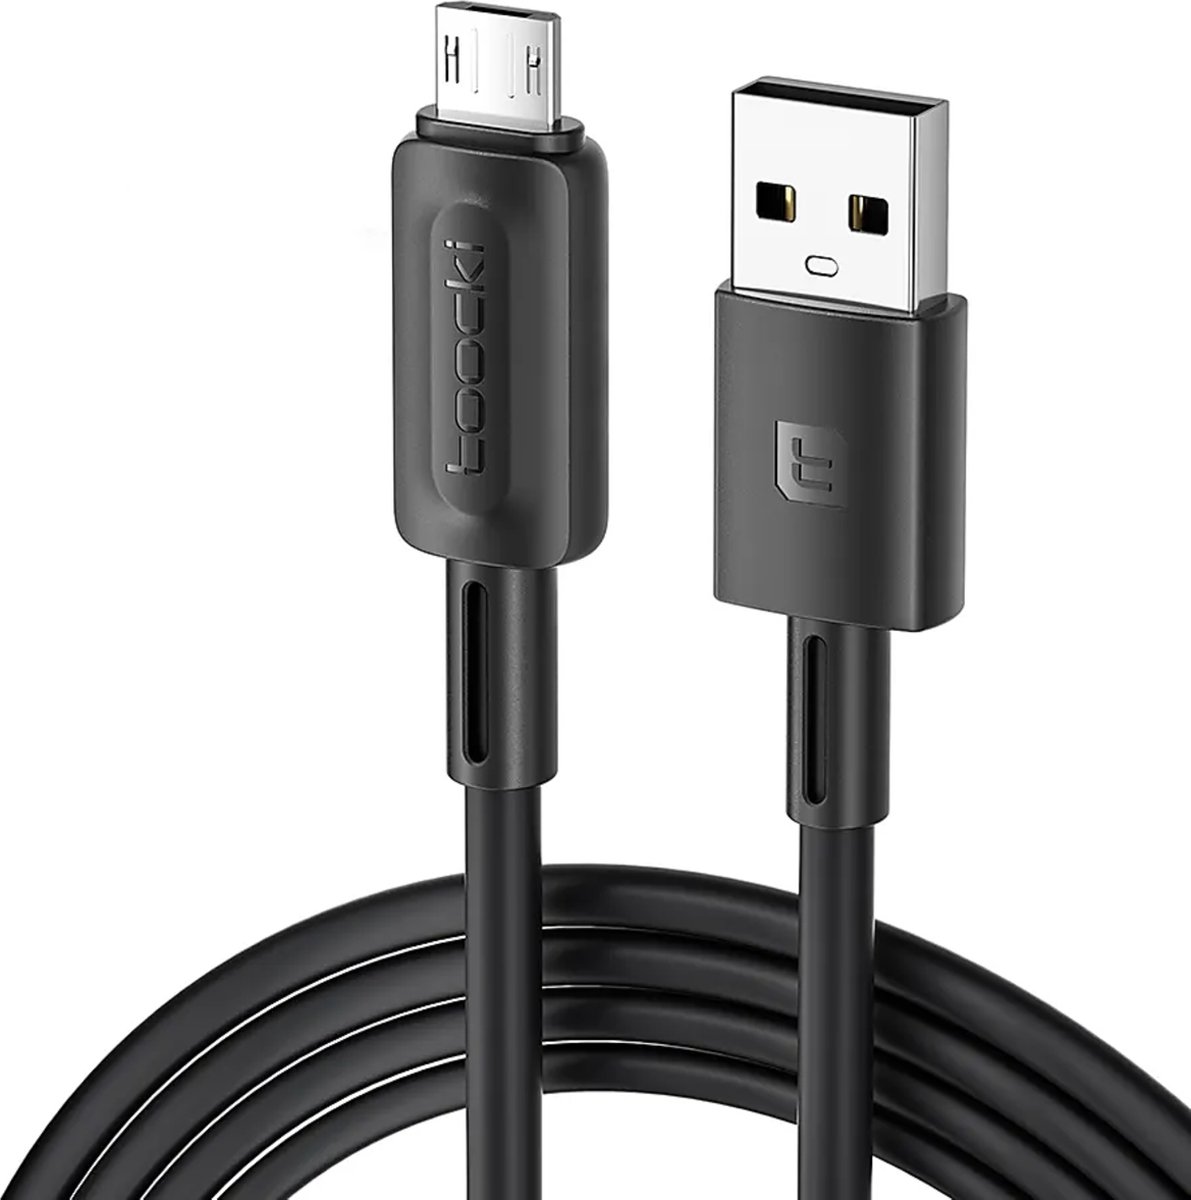 Toocki Oplaadkabel 'Fast Charging' - USB-A naar MICRO USB - 12W 2.4A Snellader - 1 Meter - voor Samsung, OnePlus, LG, Nokia, Huawei, Xiaomi, Sony, PS4, Xbox One, JBL, Motorola, Alcatel - Tot 2 Keer Sneller - 480Gbps - Snoer van TPE-Rubber - ZWART